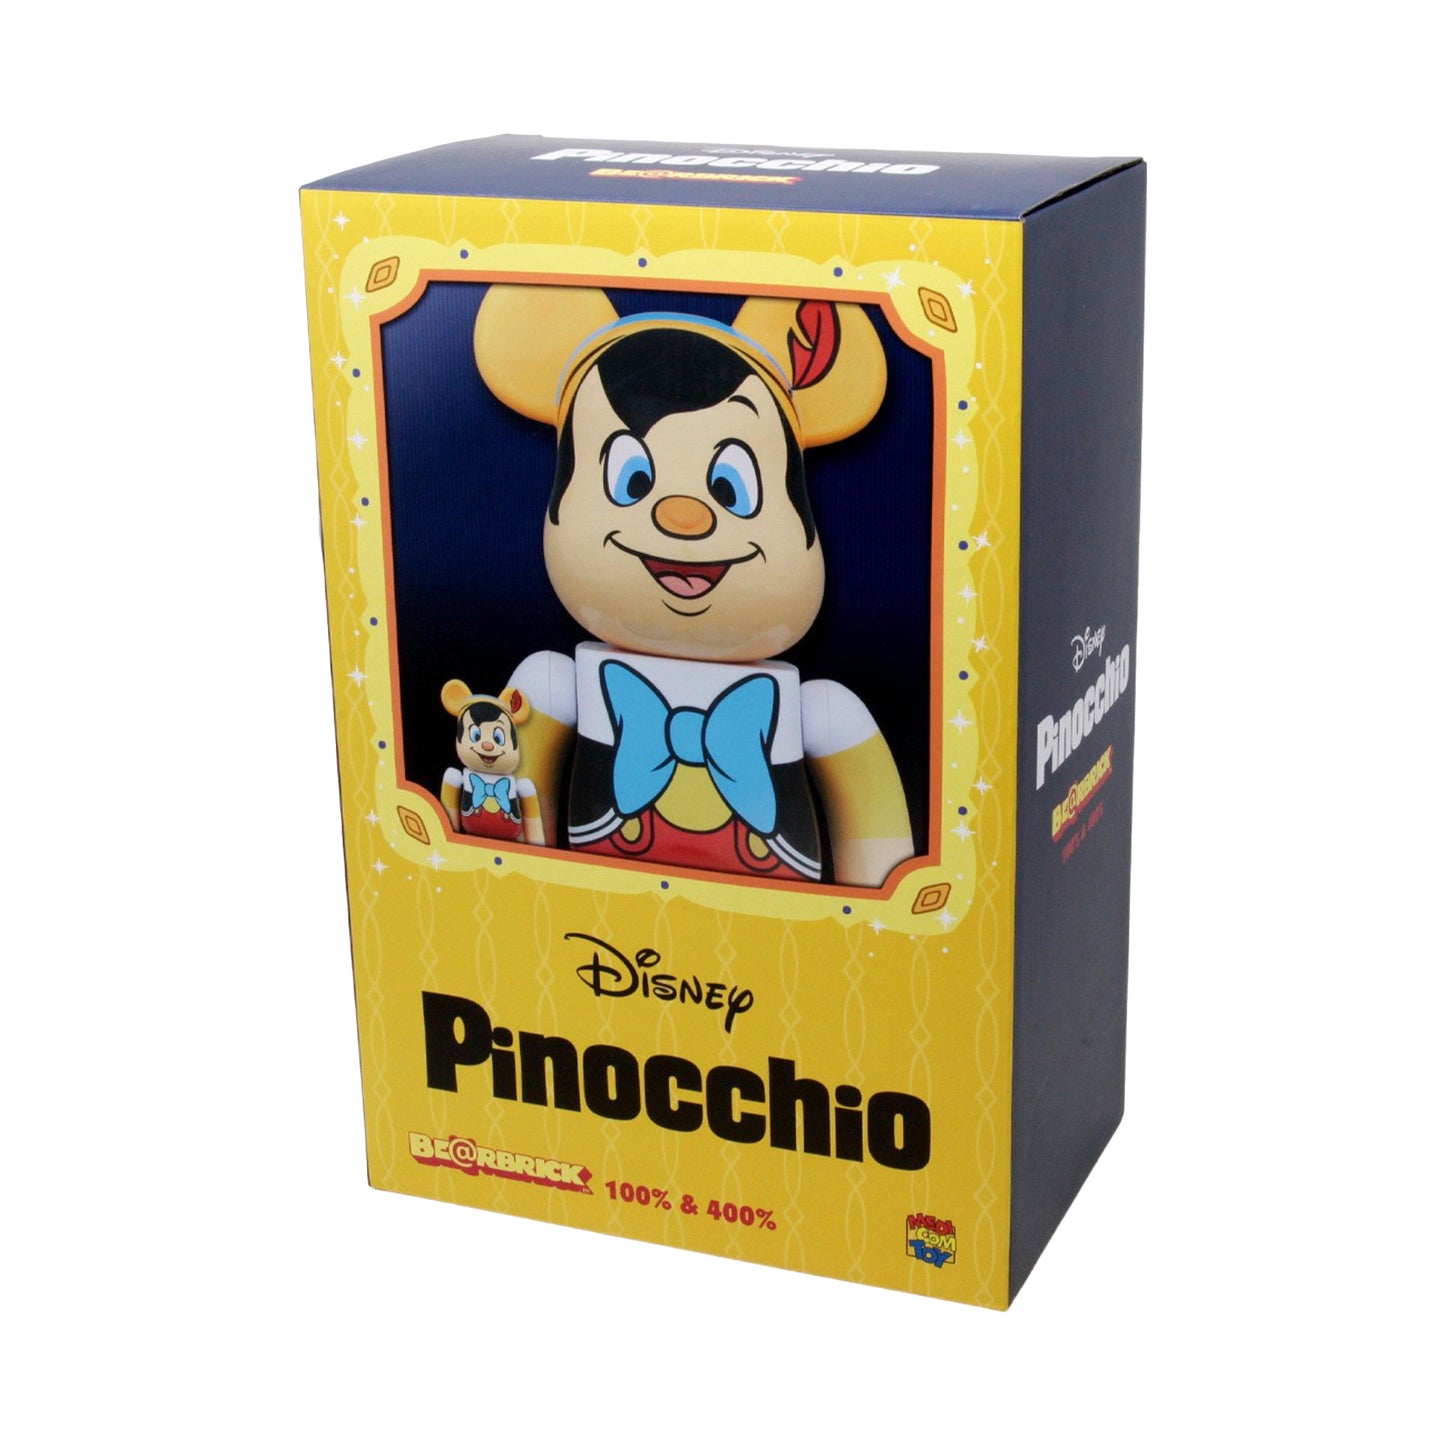 MEDICOM TOY: BE@RBRICK - Pinocchio 100% & 400%